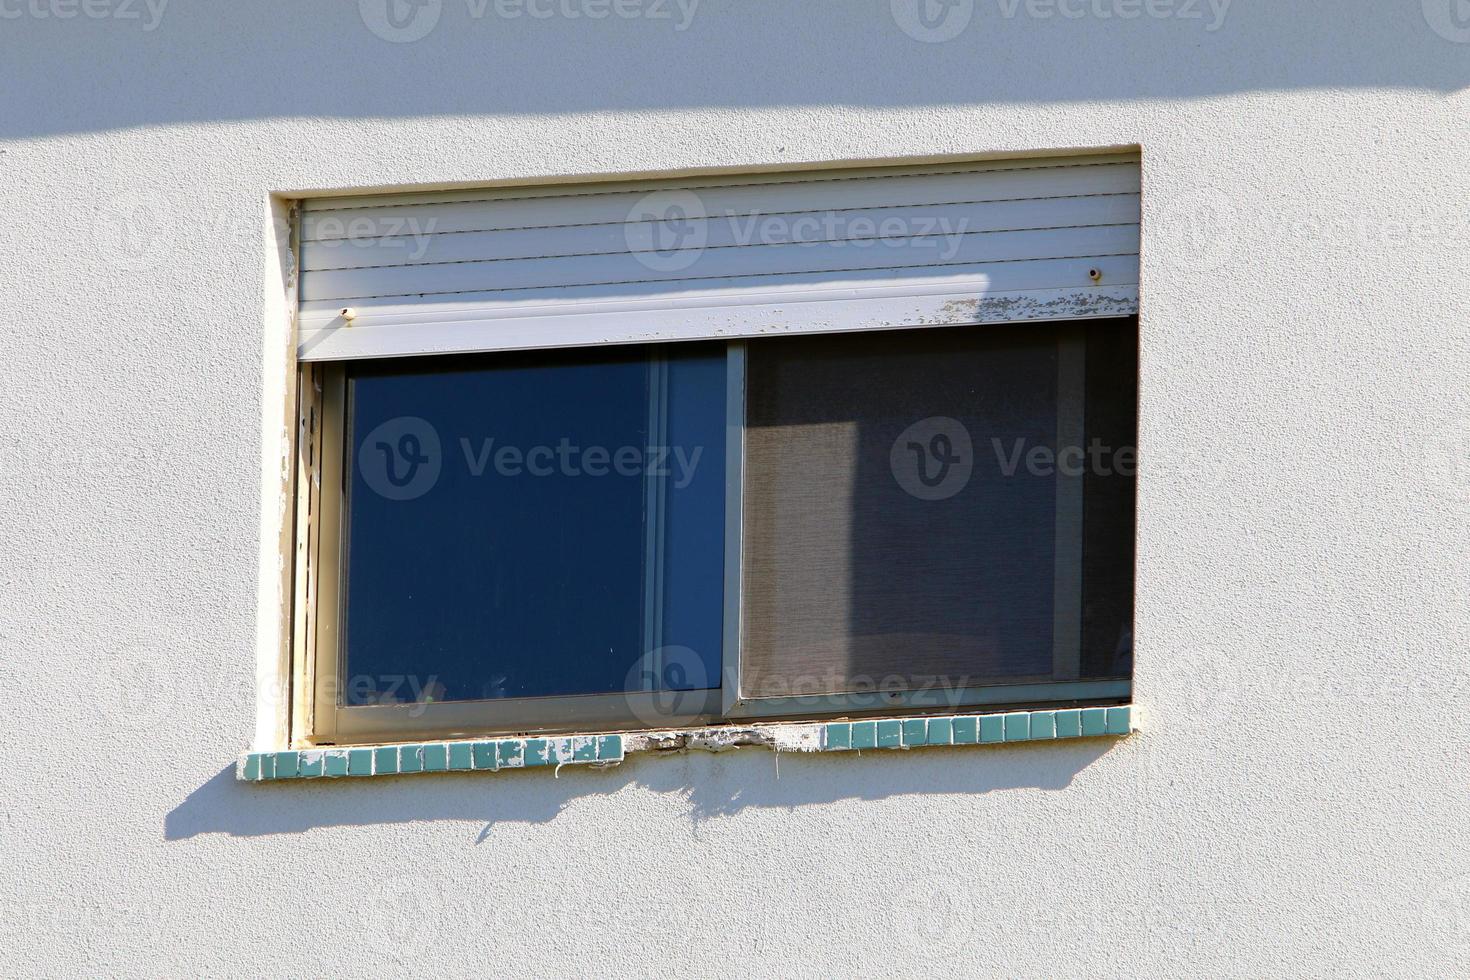 en små fönster i en bostads- byggnad i en stor stad foto